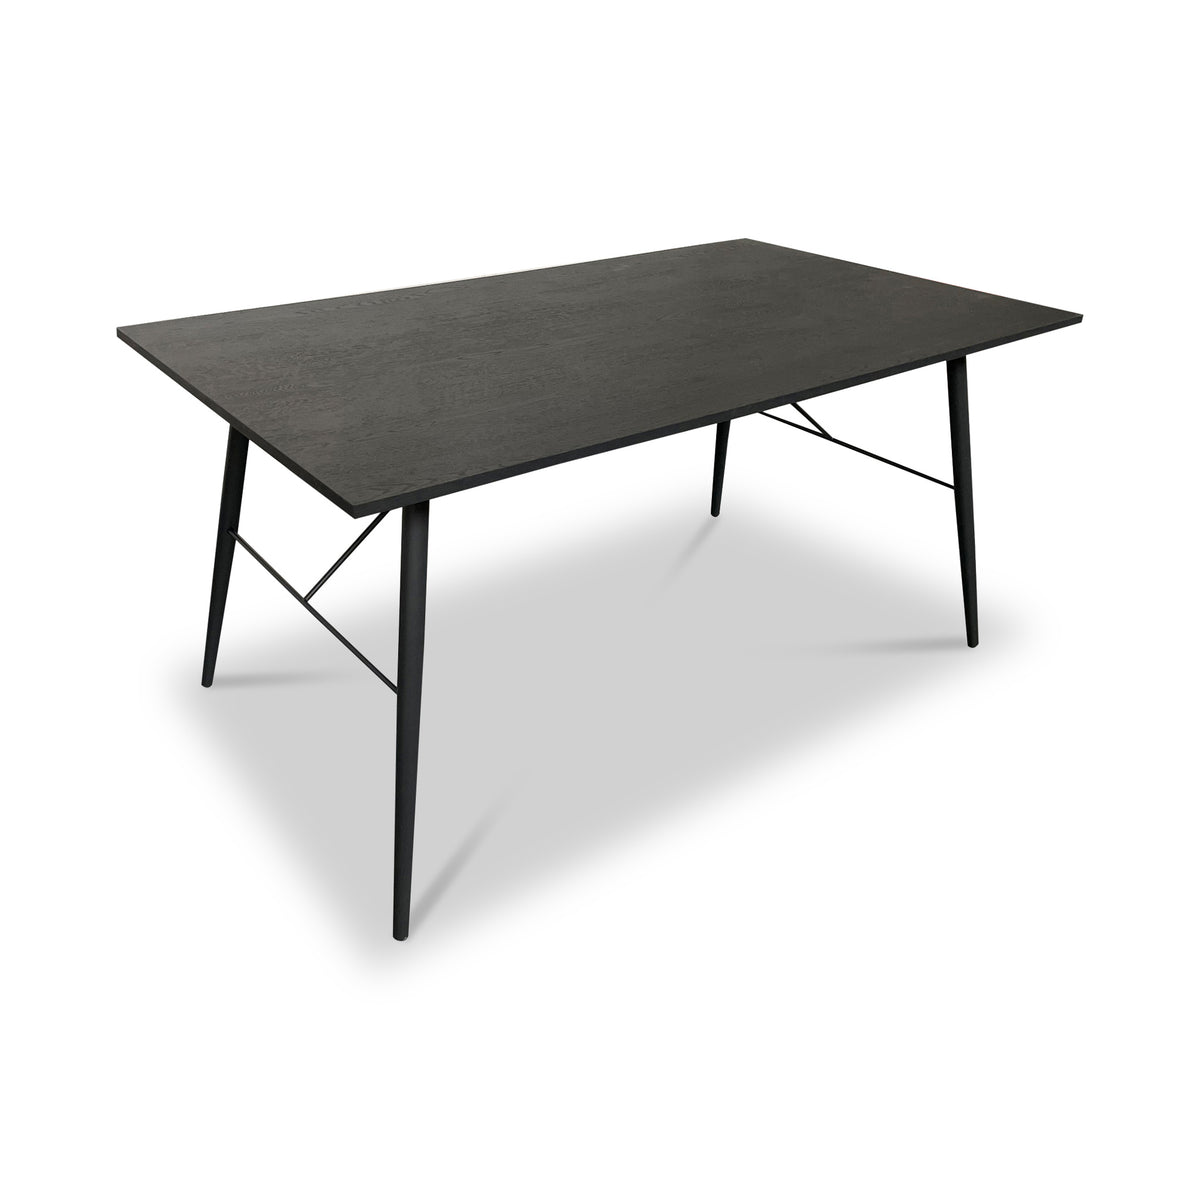 Taylor 160cm Black Rectangular Dining Table from Roseland Furniture